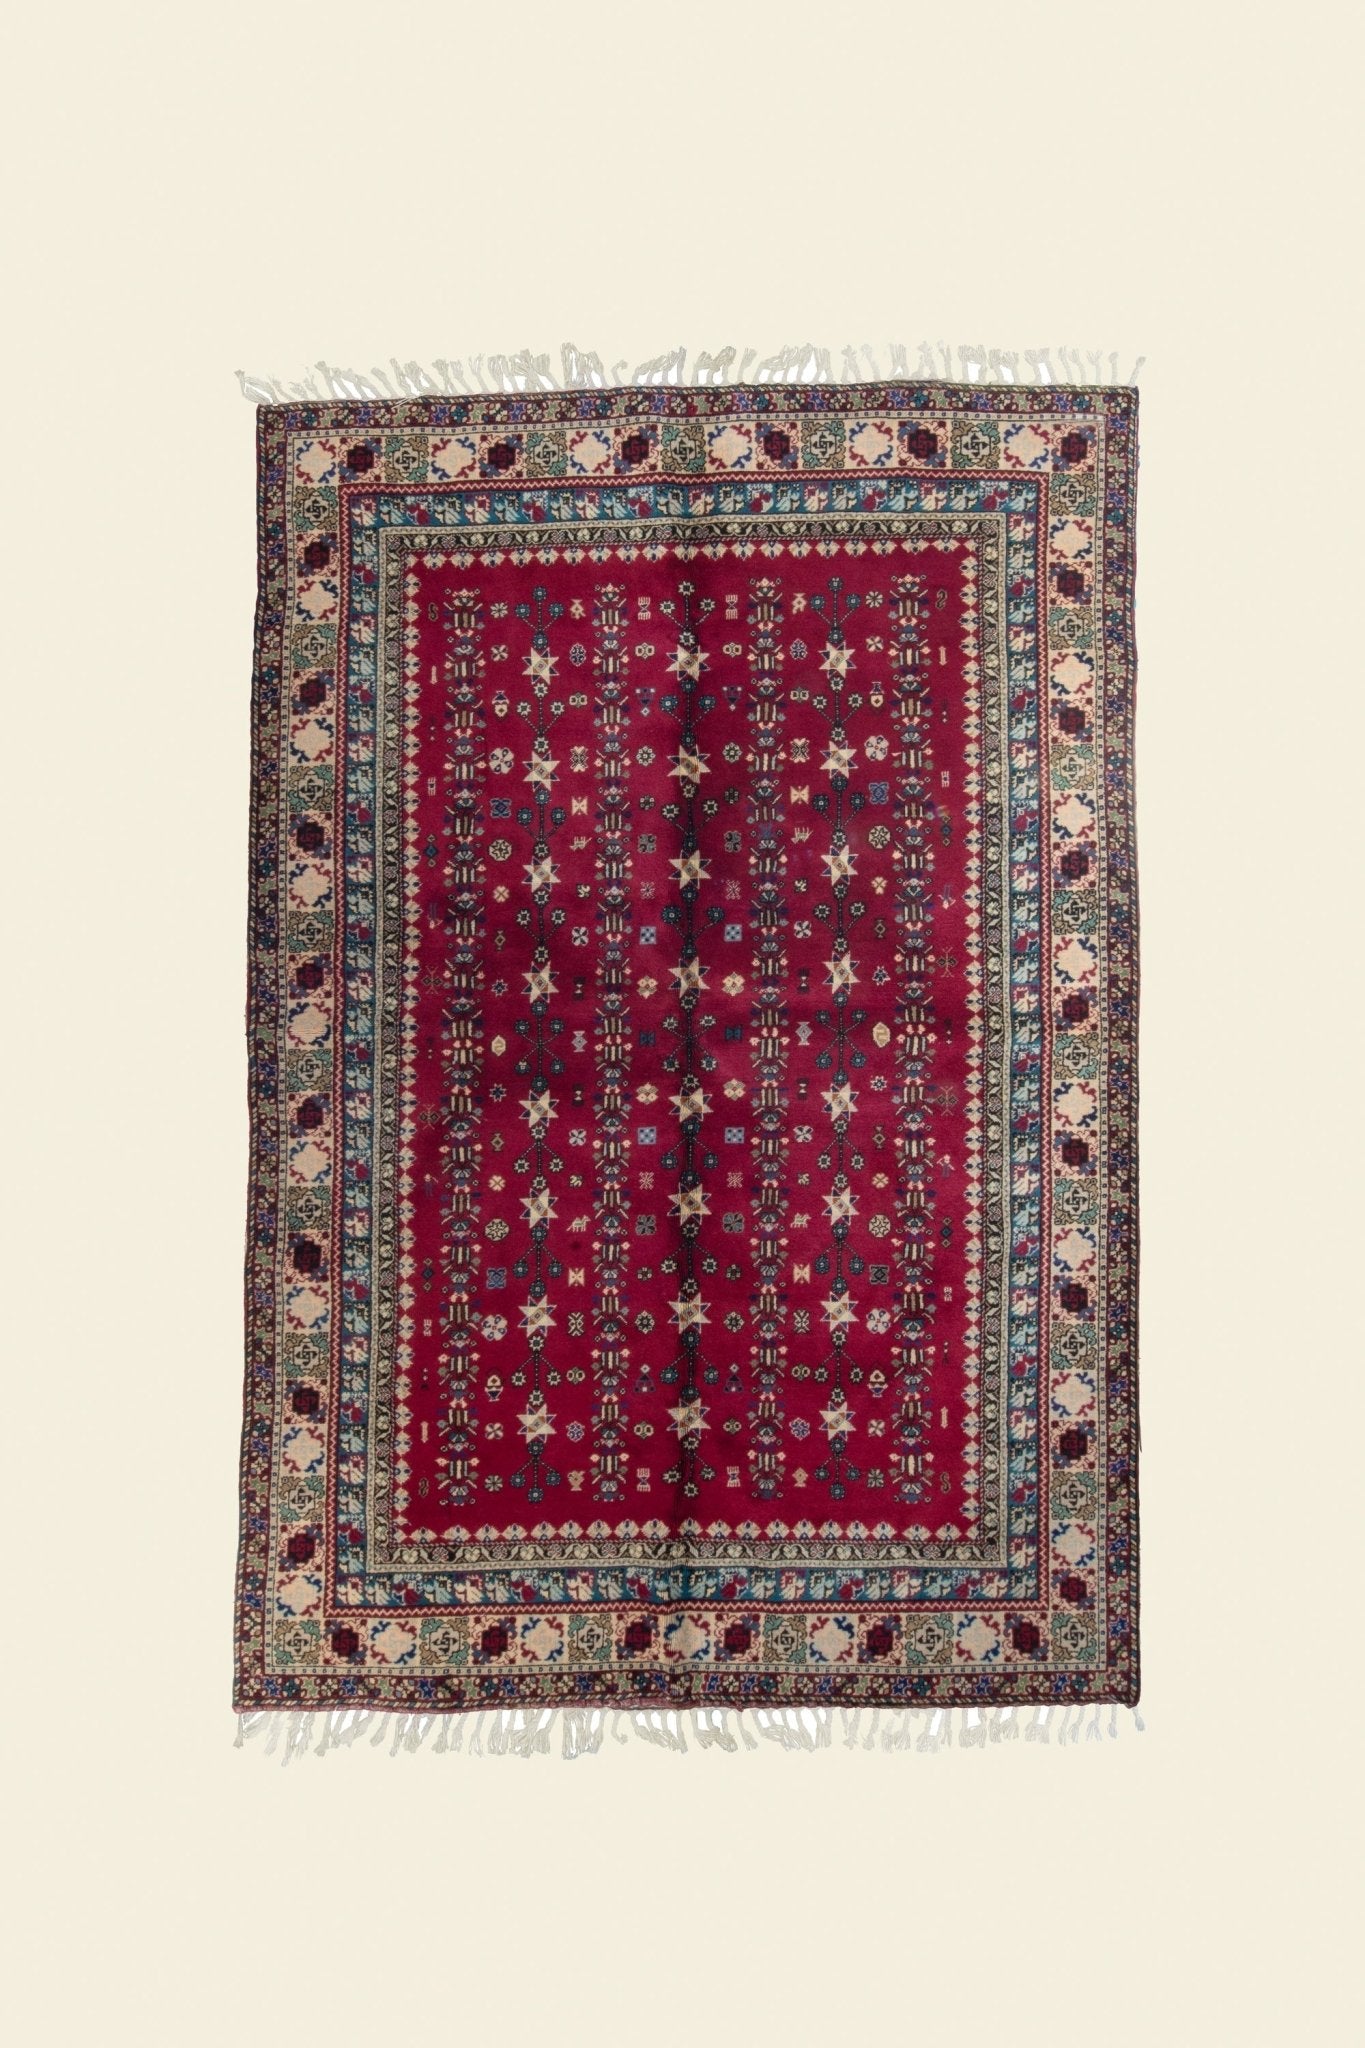 Vintage Rabat Moroccan Rug 6’39’’ x 9'41" - 195 cm x 287 cm (Wool) - Dar Bouchaib Marrakech